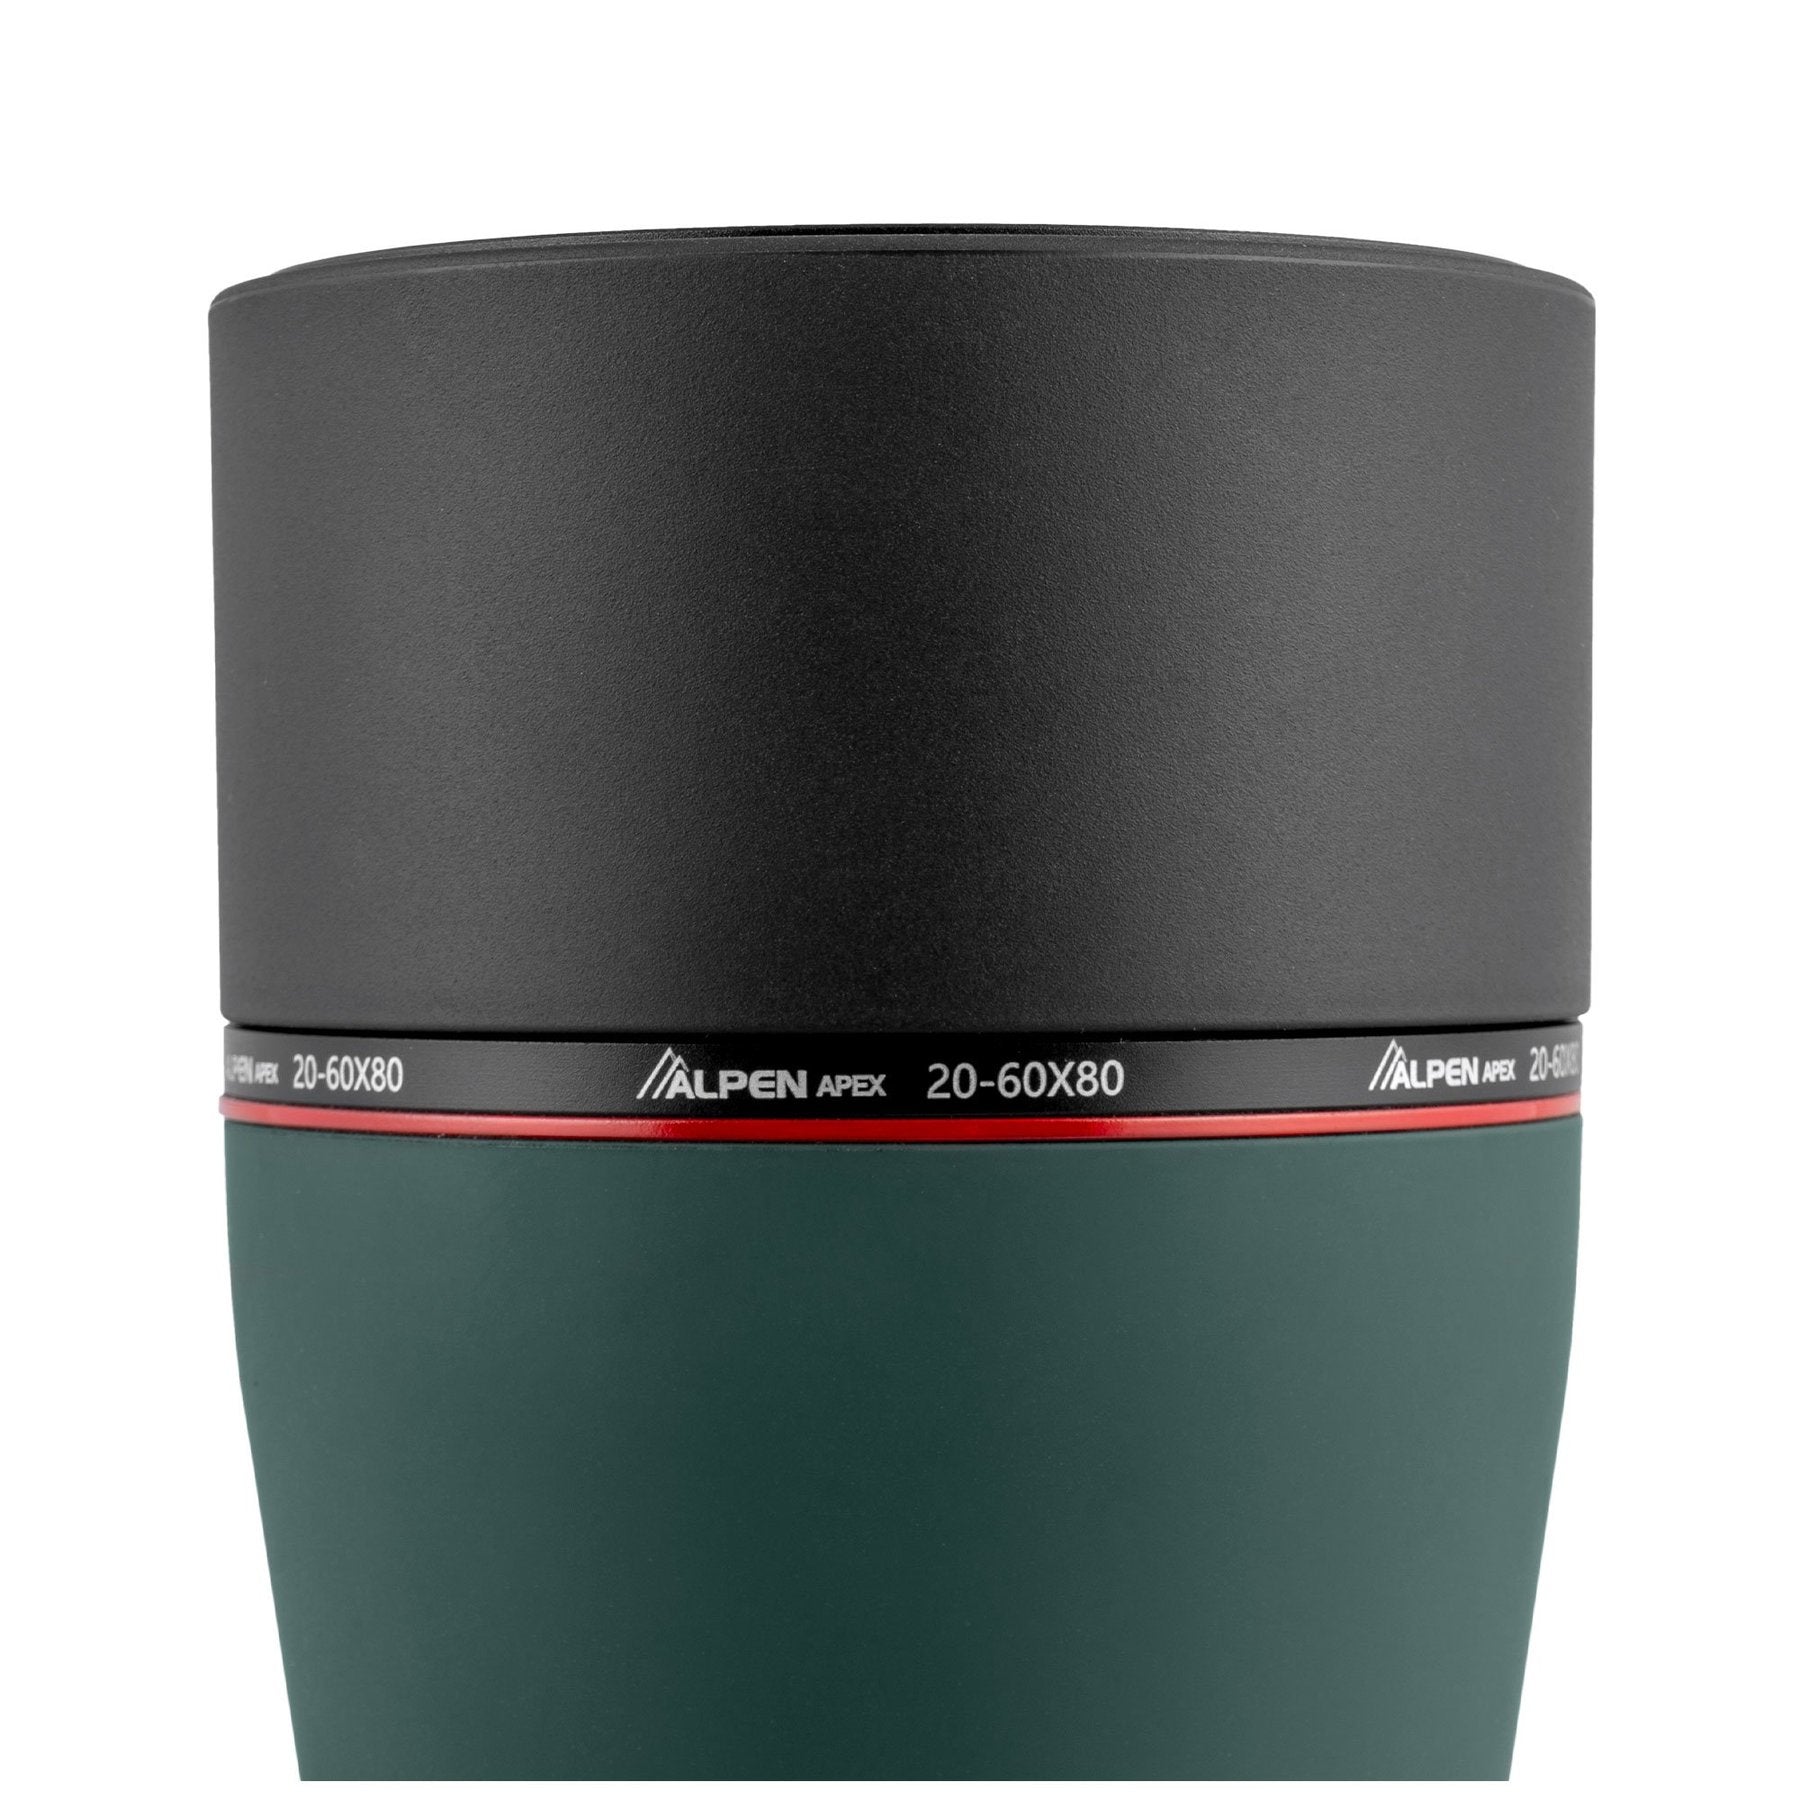 Alpen Apex 20-60x80mm All Weather Observation Spotter-888 - CoreScientifics-Telescopes, Sport Optics & More